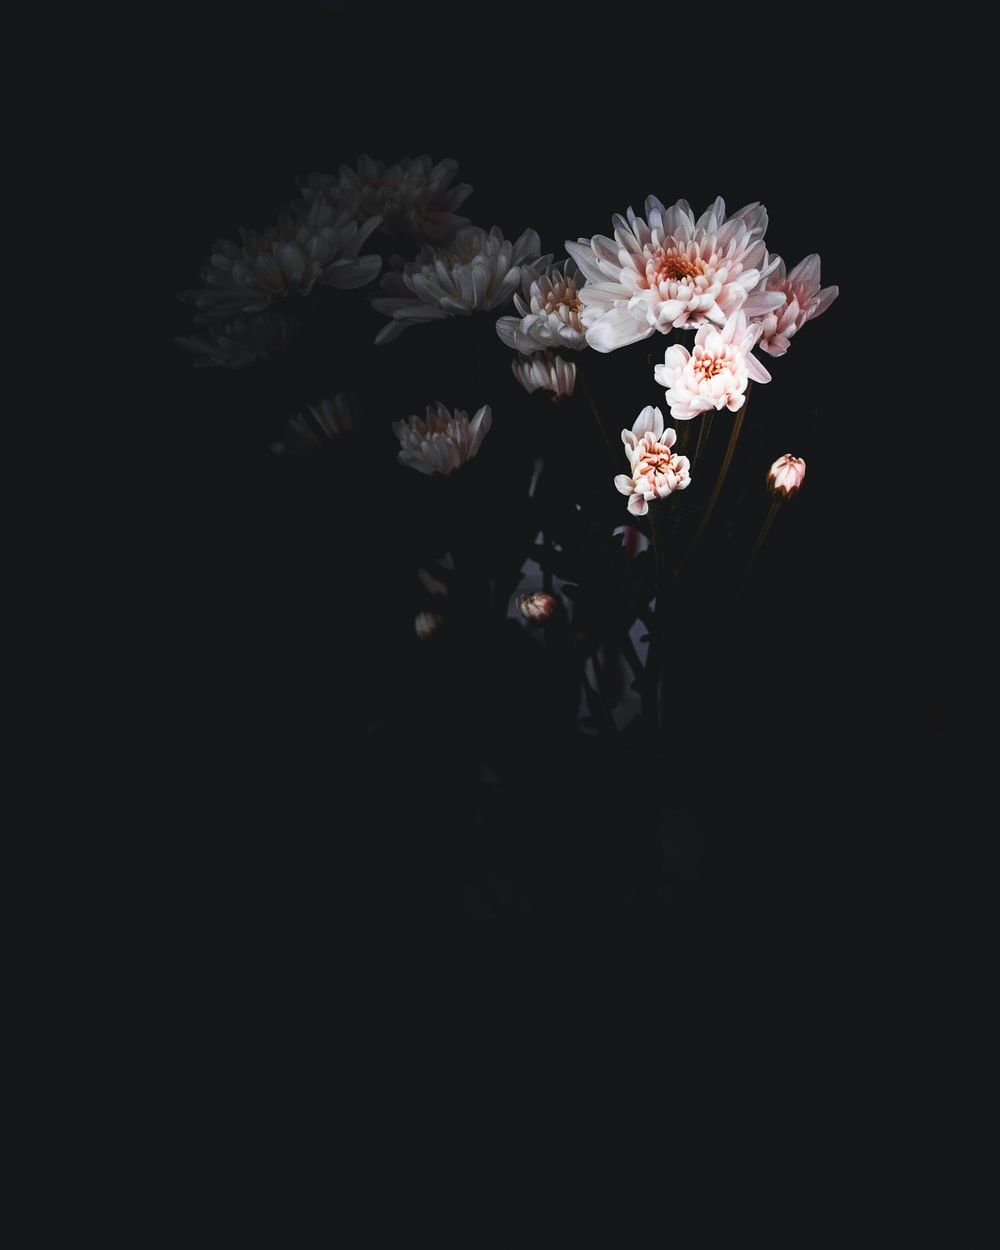 Flower On Dark Background Picture. Download Free Image